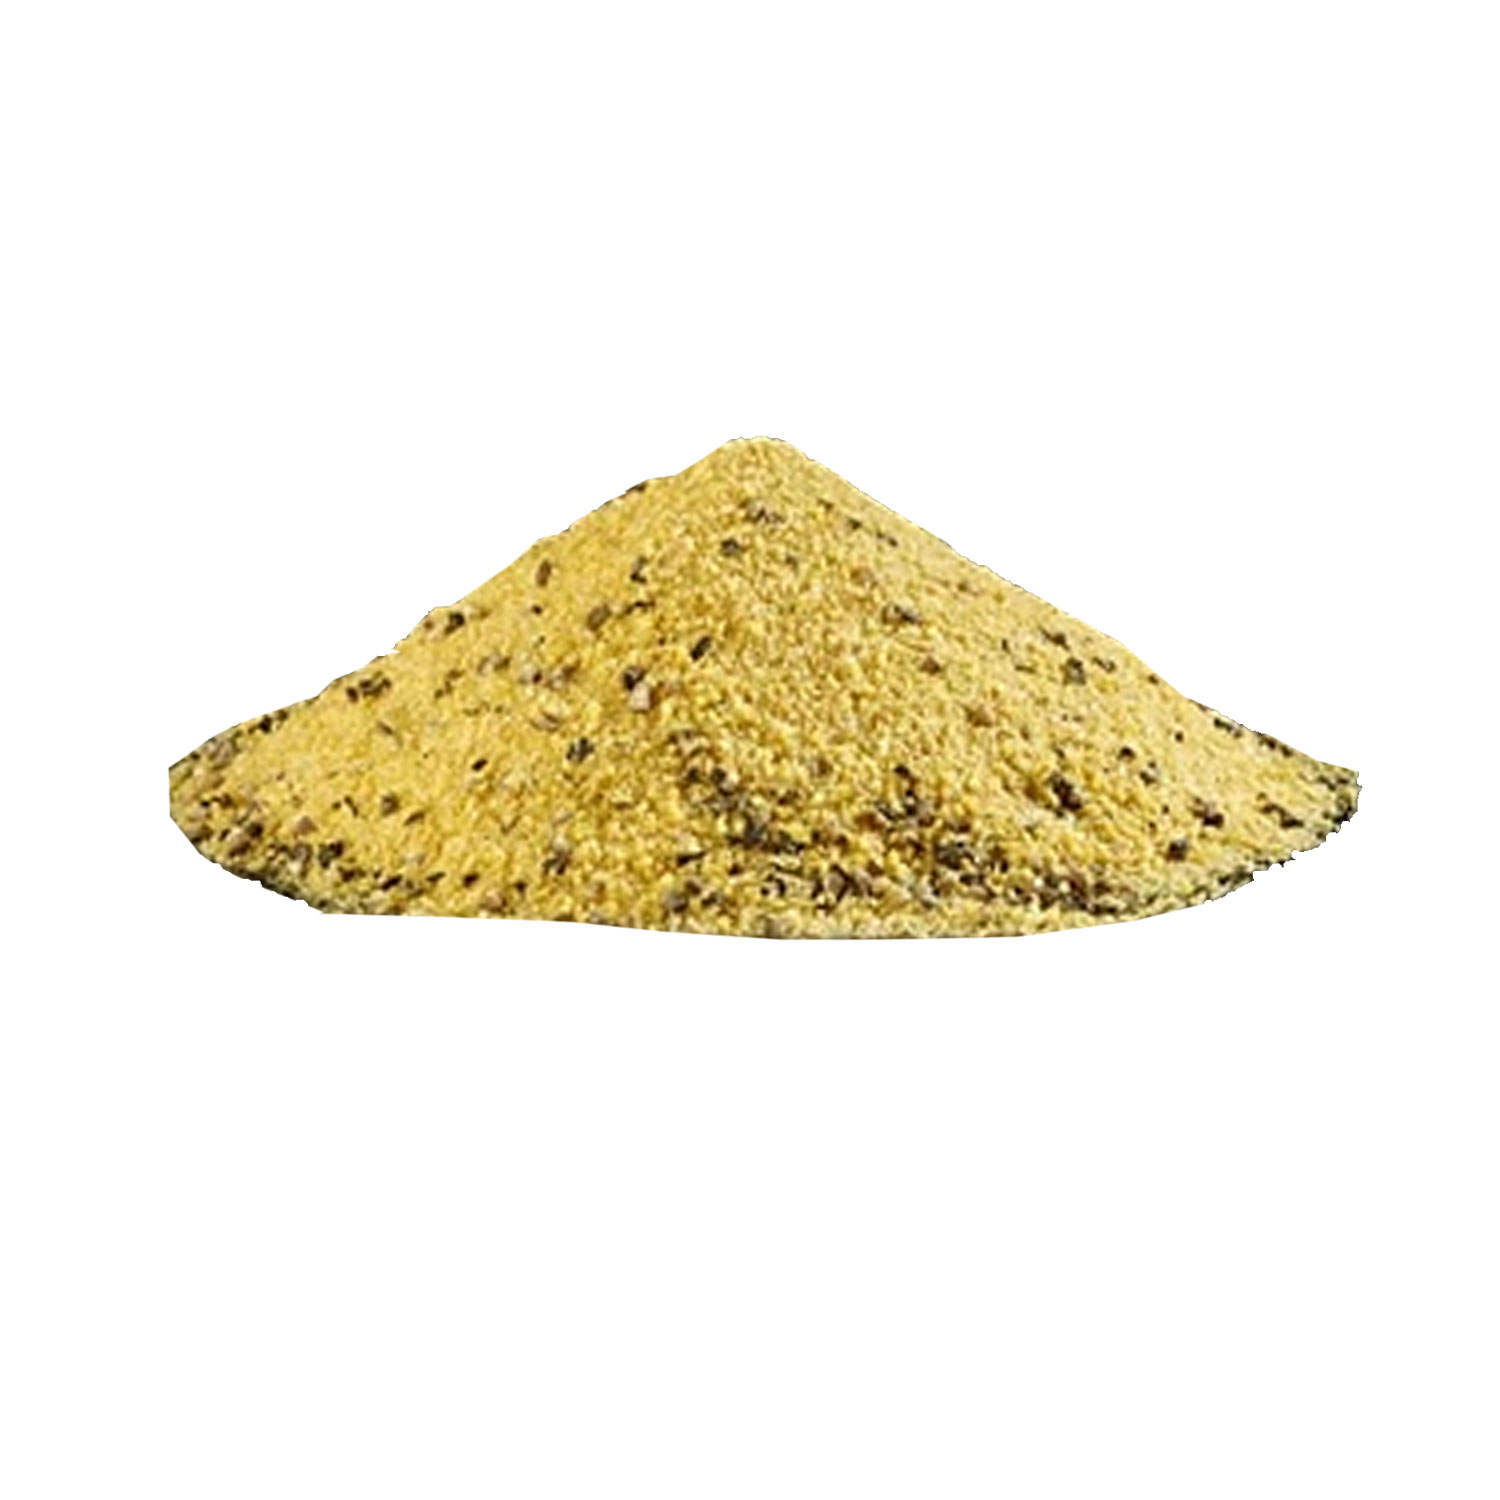 Lemon Pepper Seasoning No Salt - Free Sample — My Spice Sage